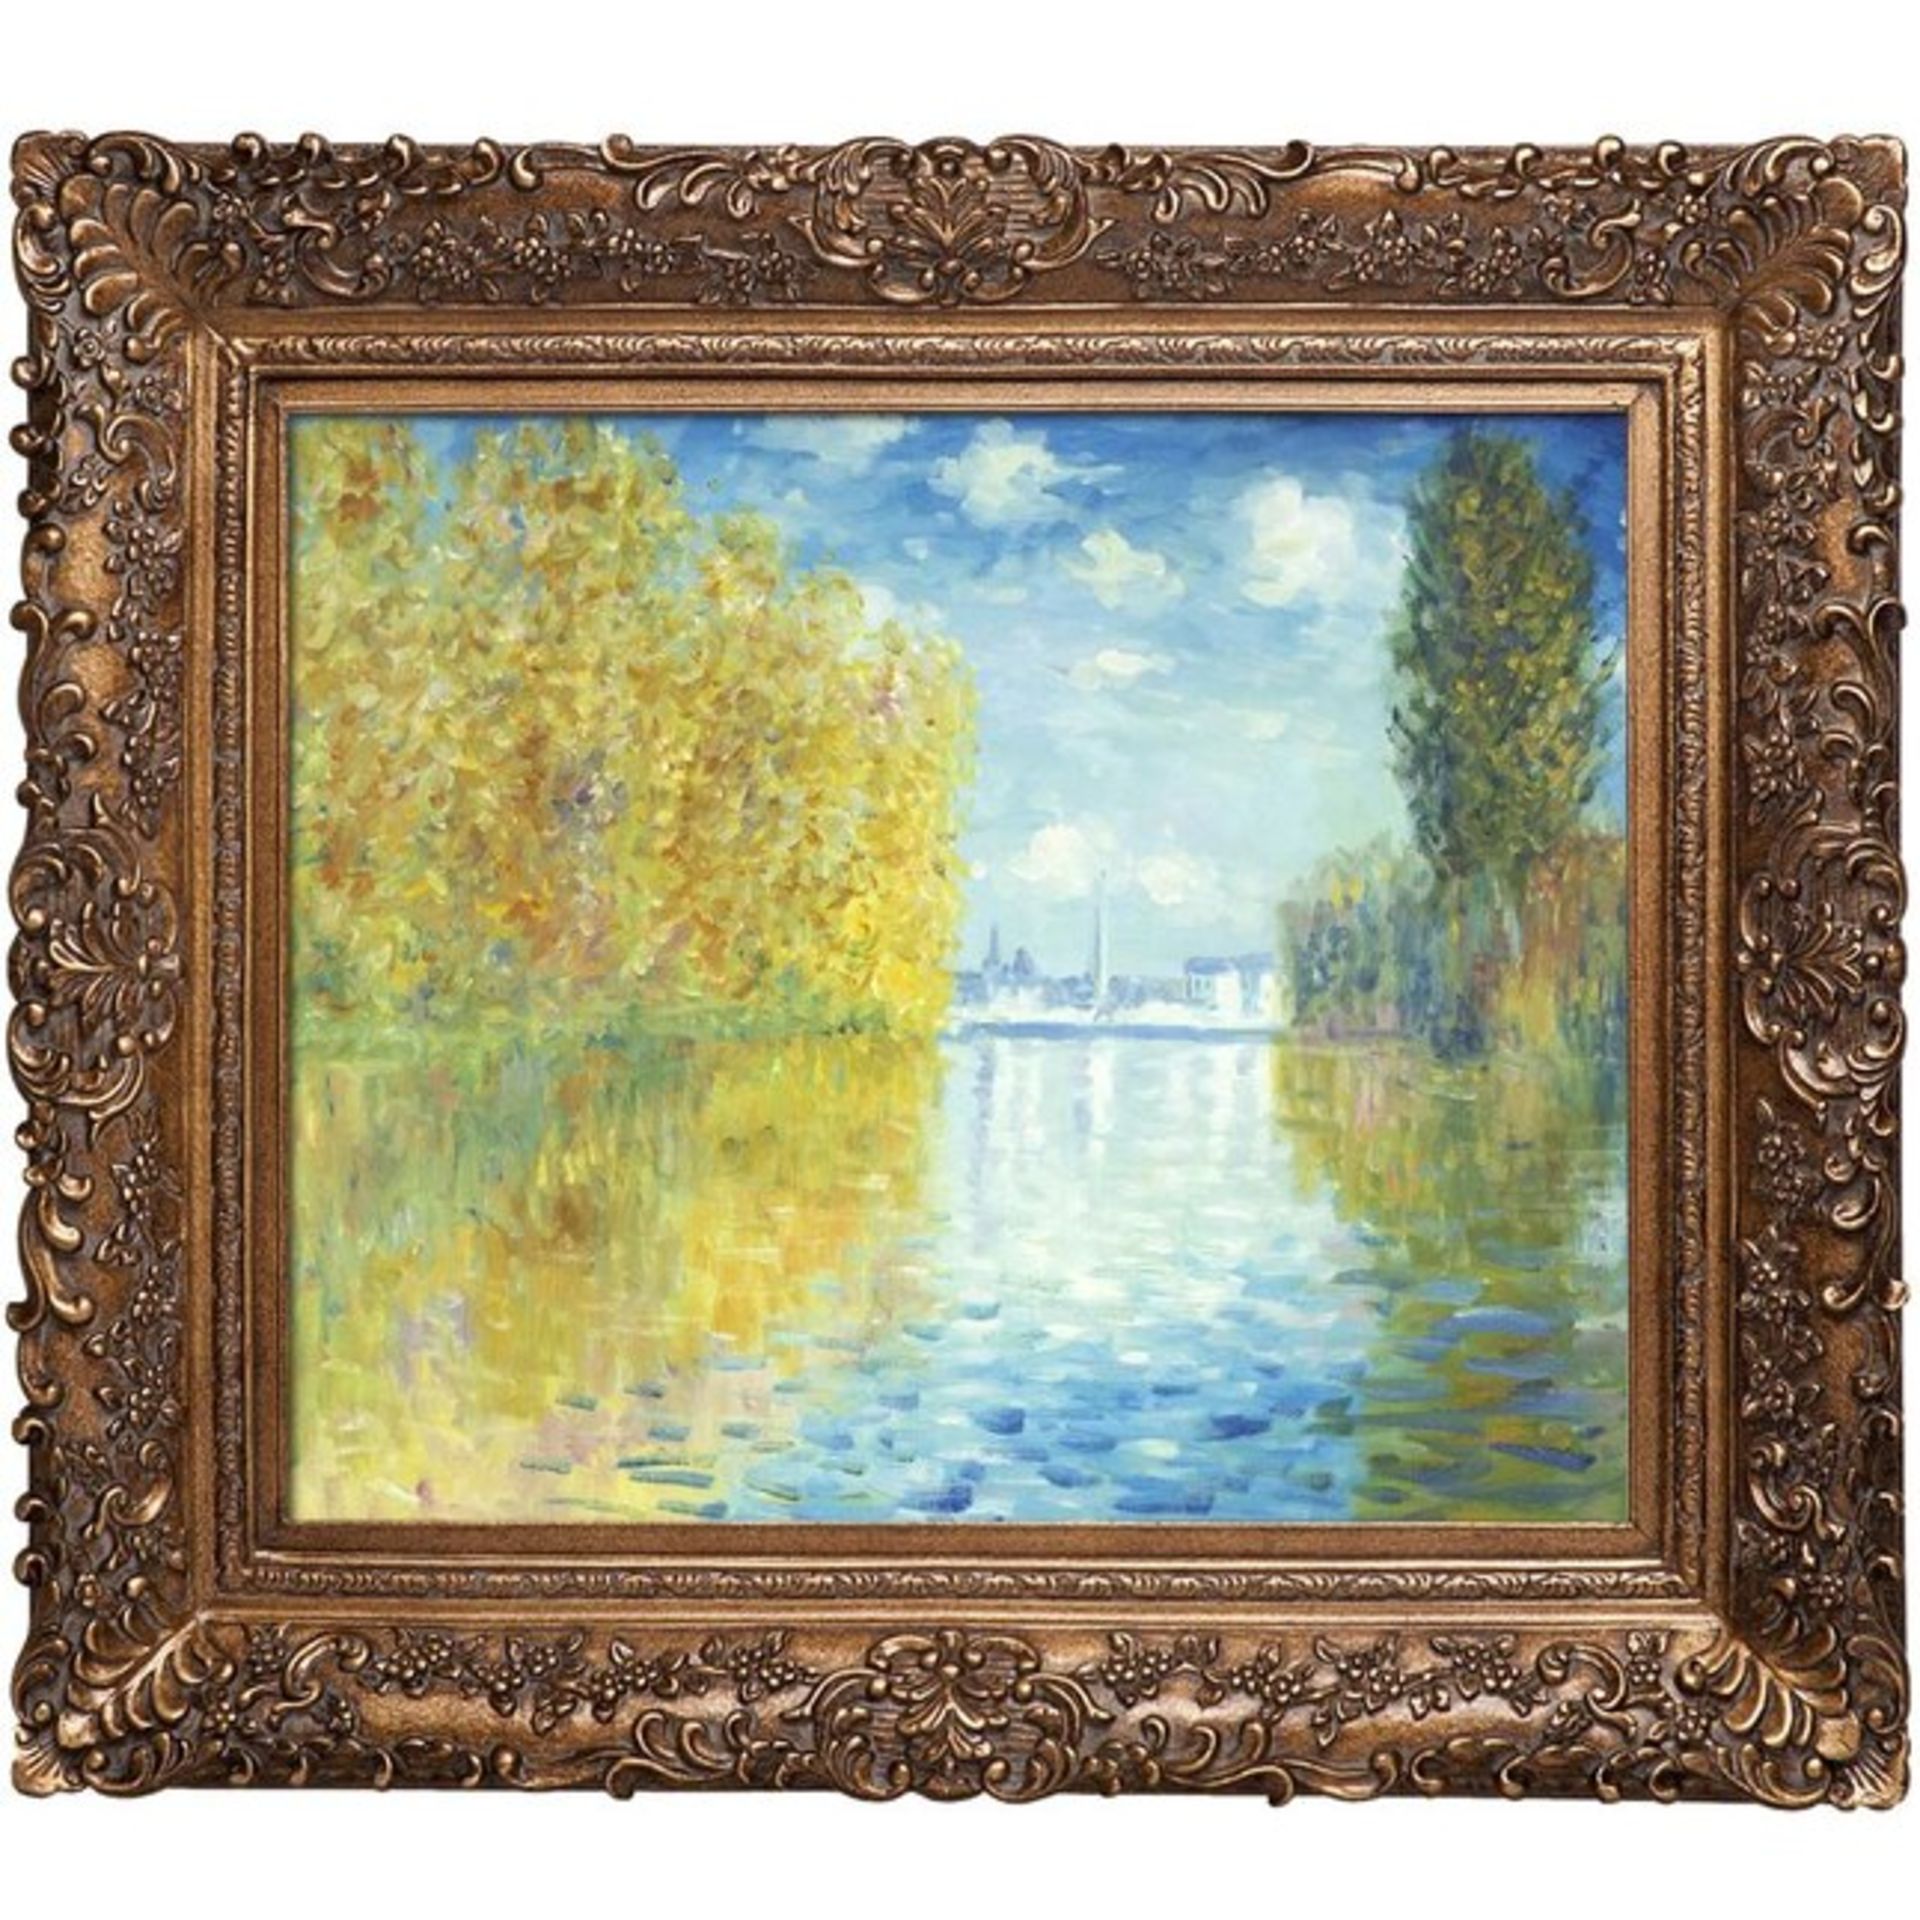 Claude Monet "Autumn at Argenteuil, 1873" Oil Painting, After